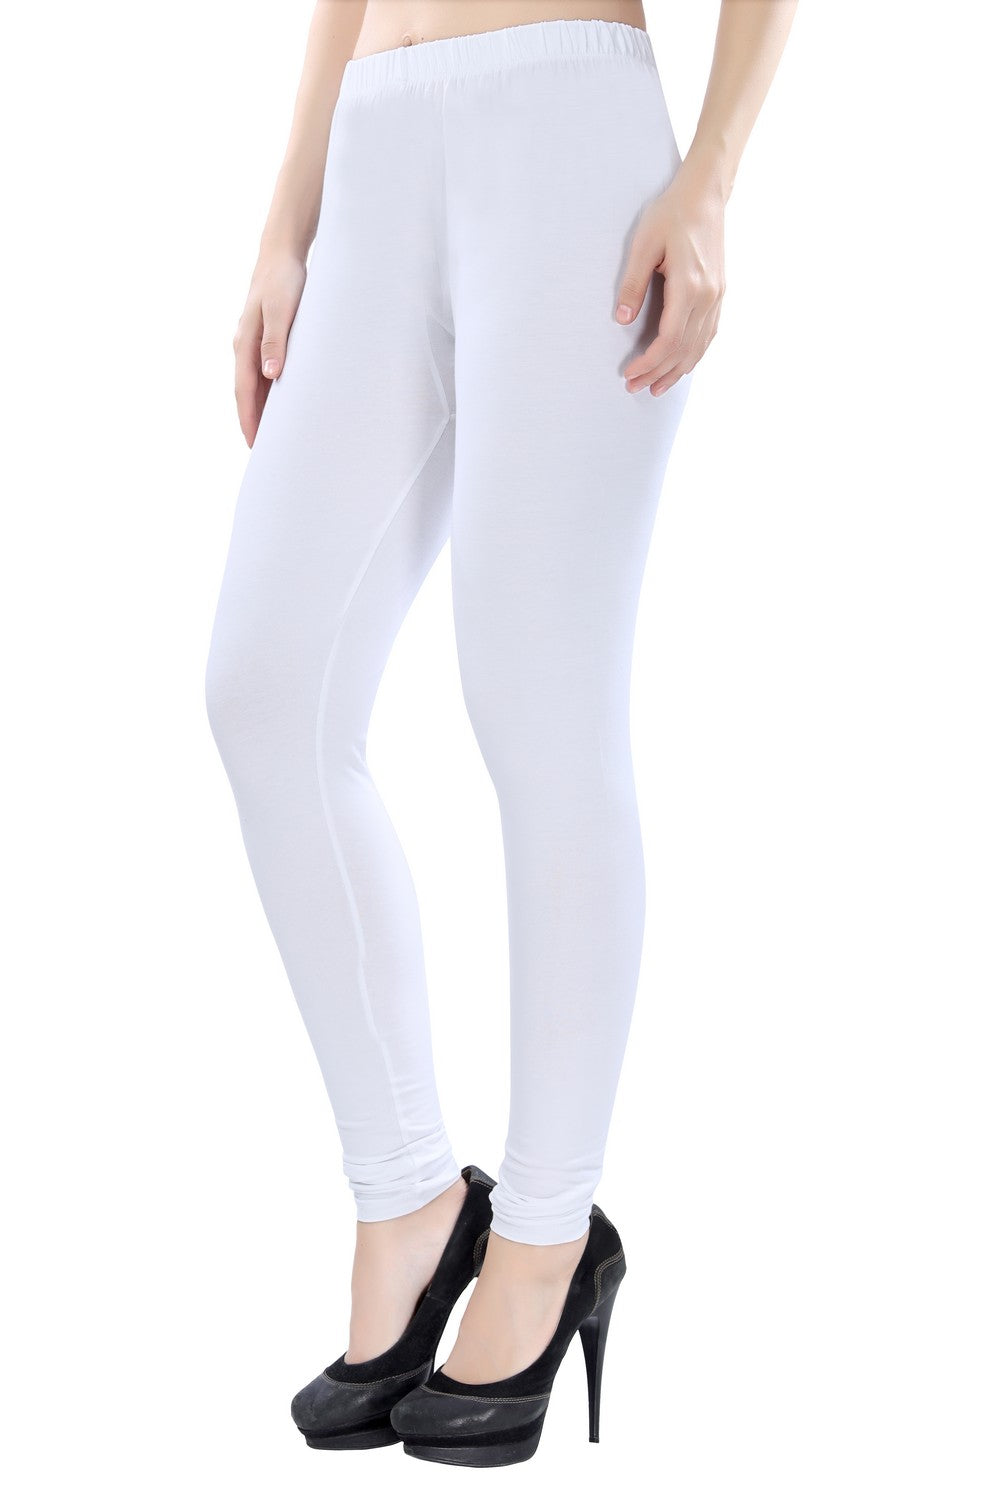 TRASA Women's Cotton 4 Way Stretchable Slim Fit Churidar Leggings - Navy  Blue